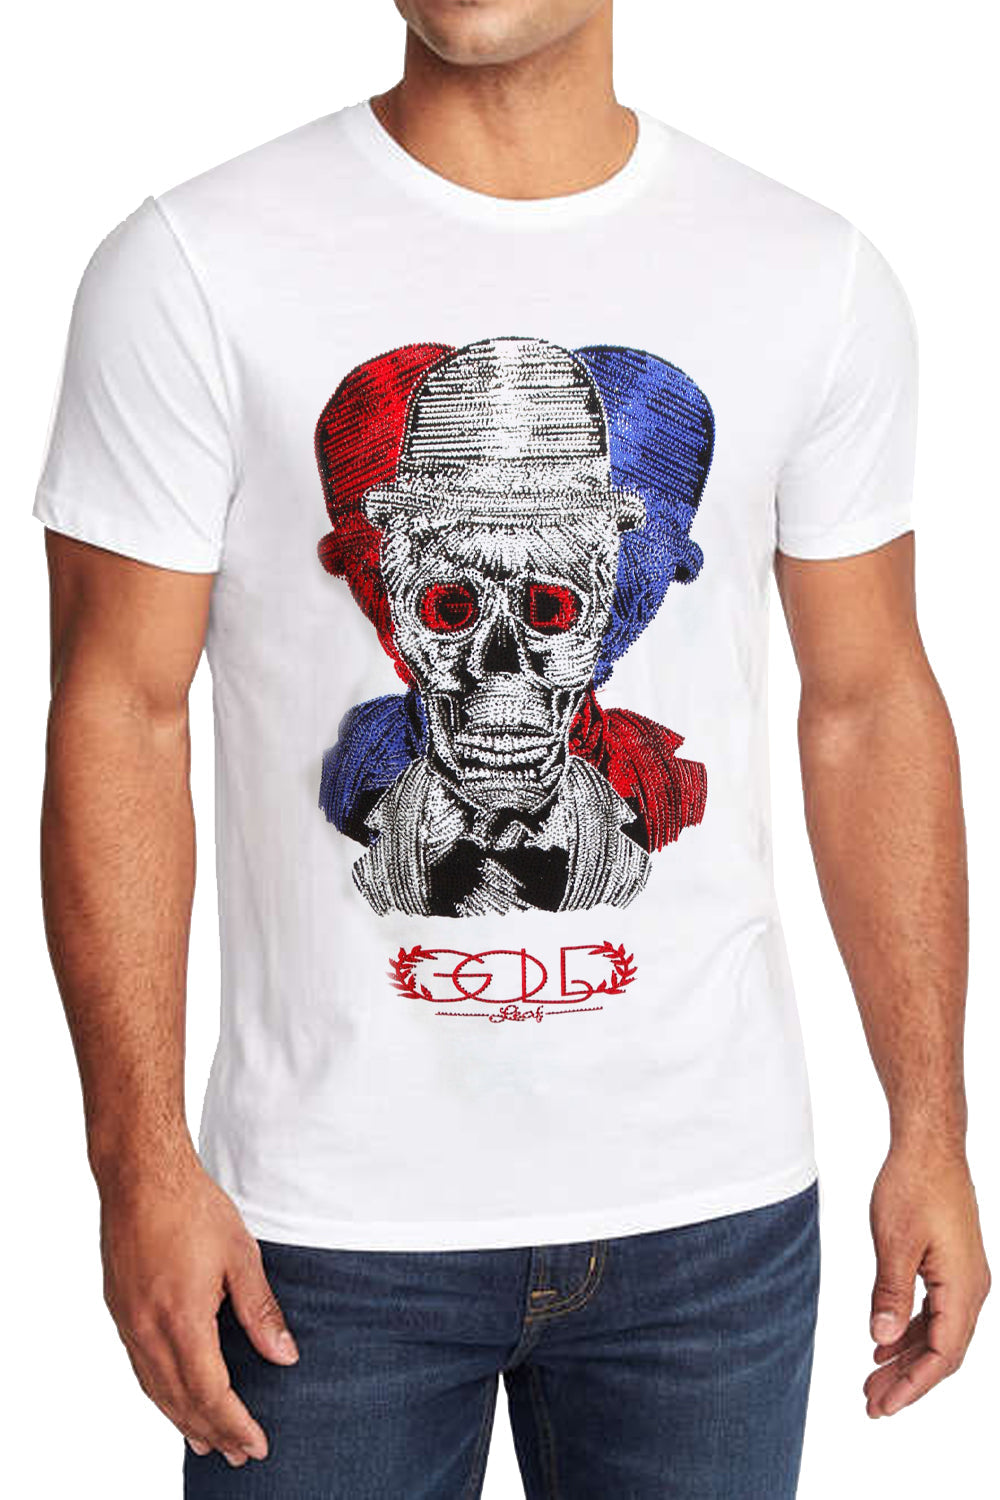 Barabas Men's Printed Graphic Skull Hat Tee Crew Neck T-Shirt TR563